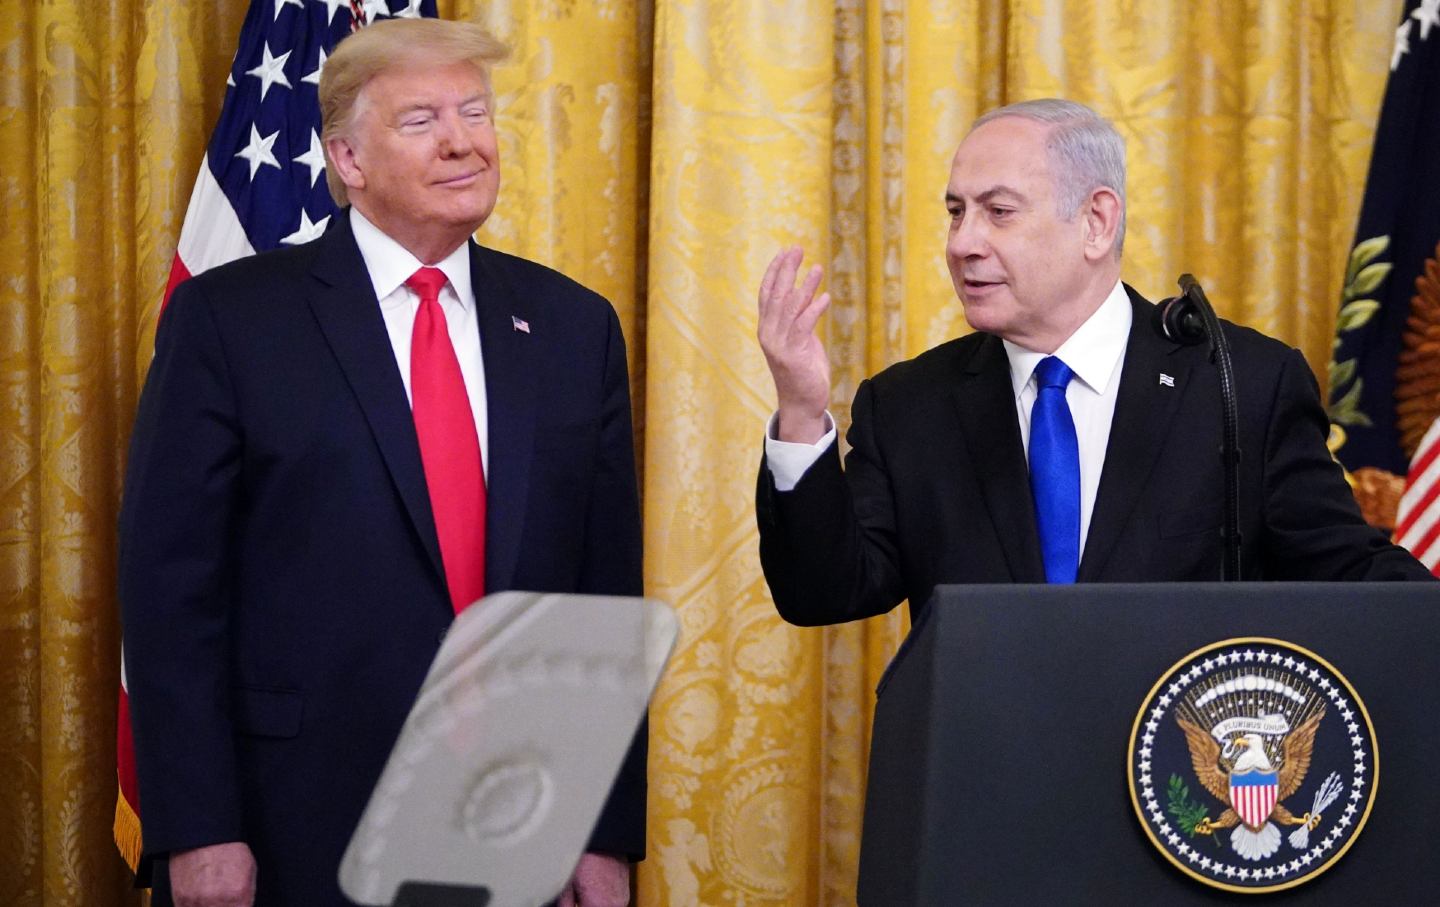 Trump and Netenyahu speaking at the White House